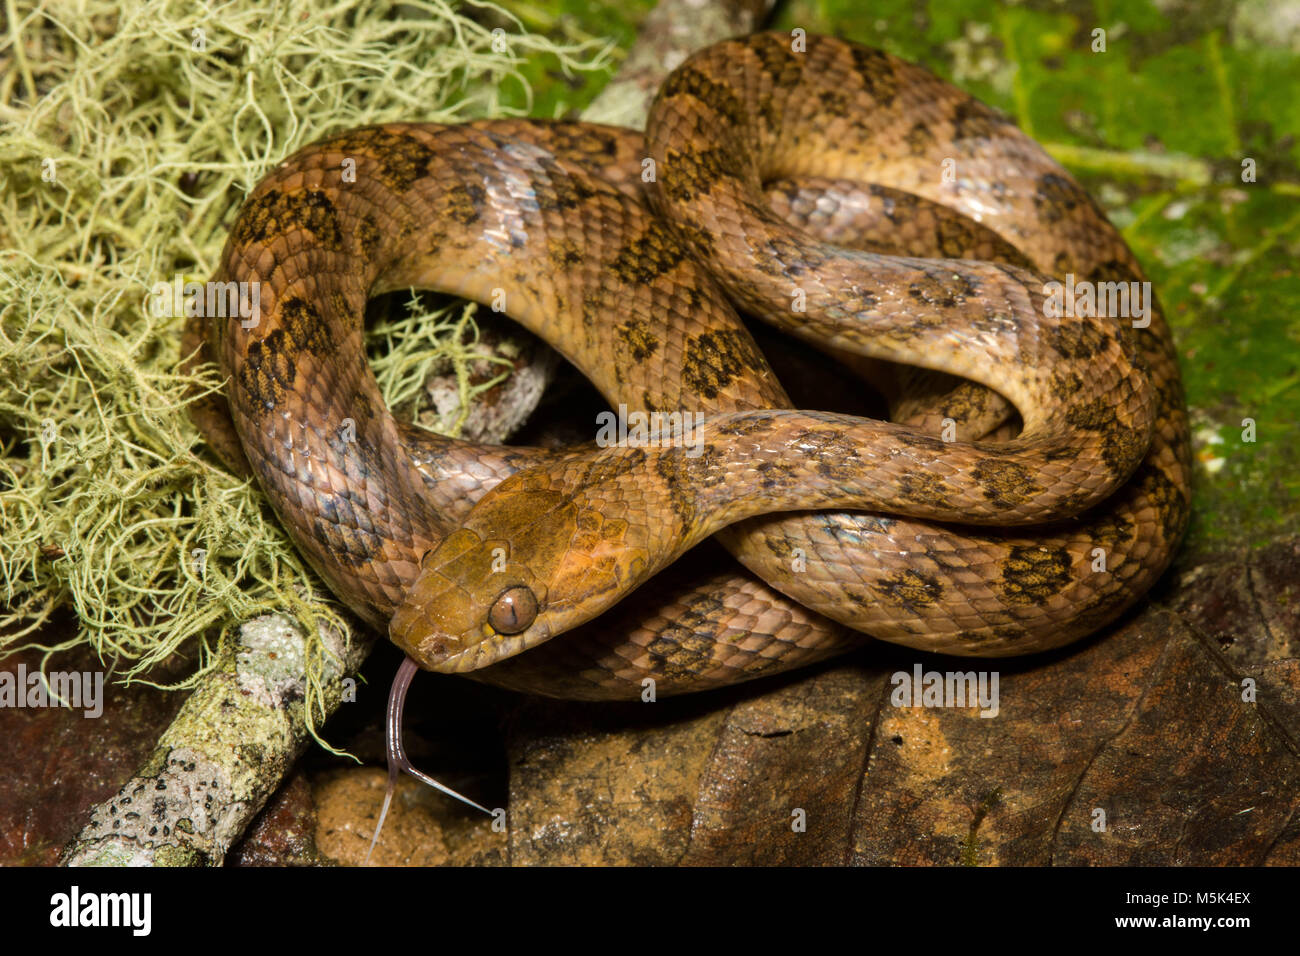 A cat eyed snake (Leptodeira septentrionalis) from Southern Ecuador. Stock Photo